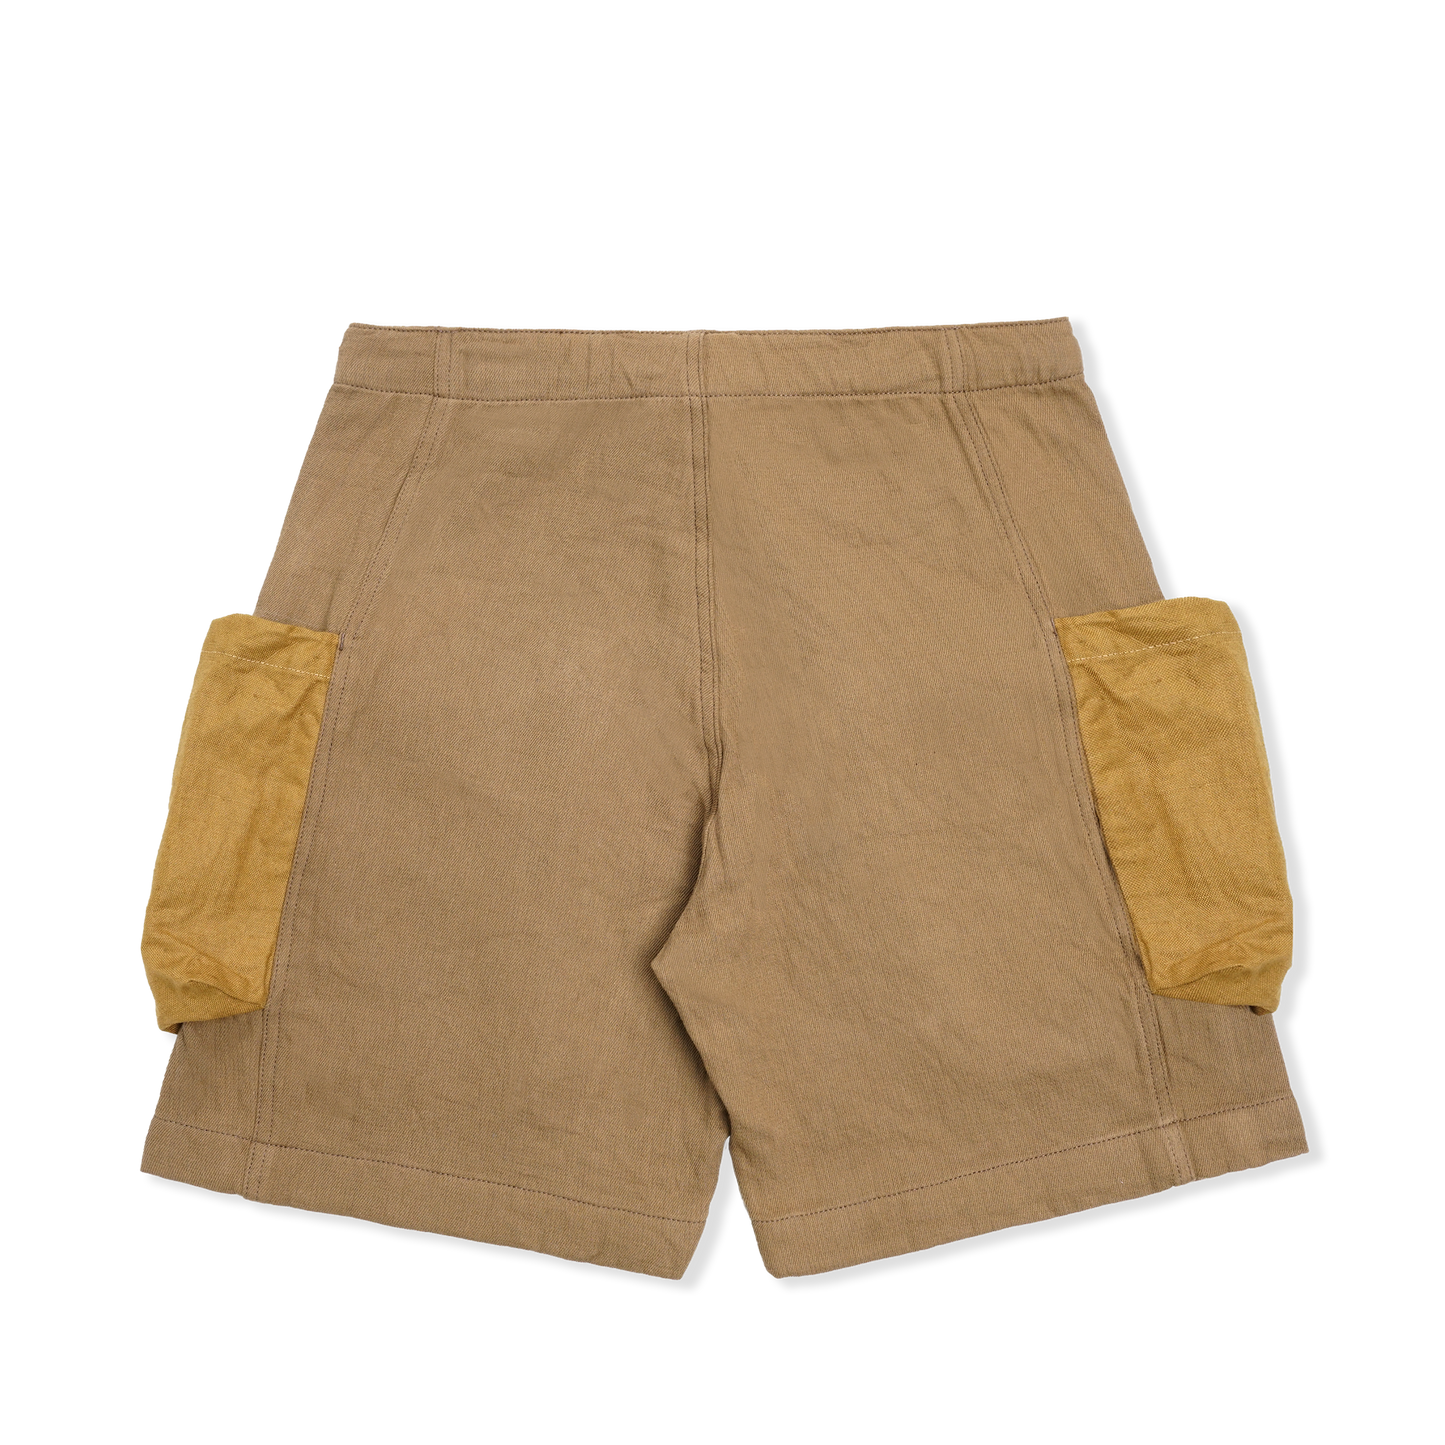 Hauler Cargo Shorts Camel Brown